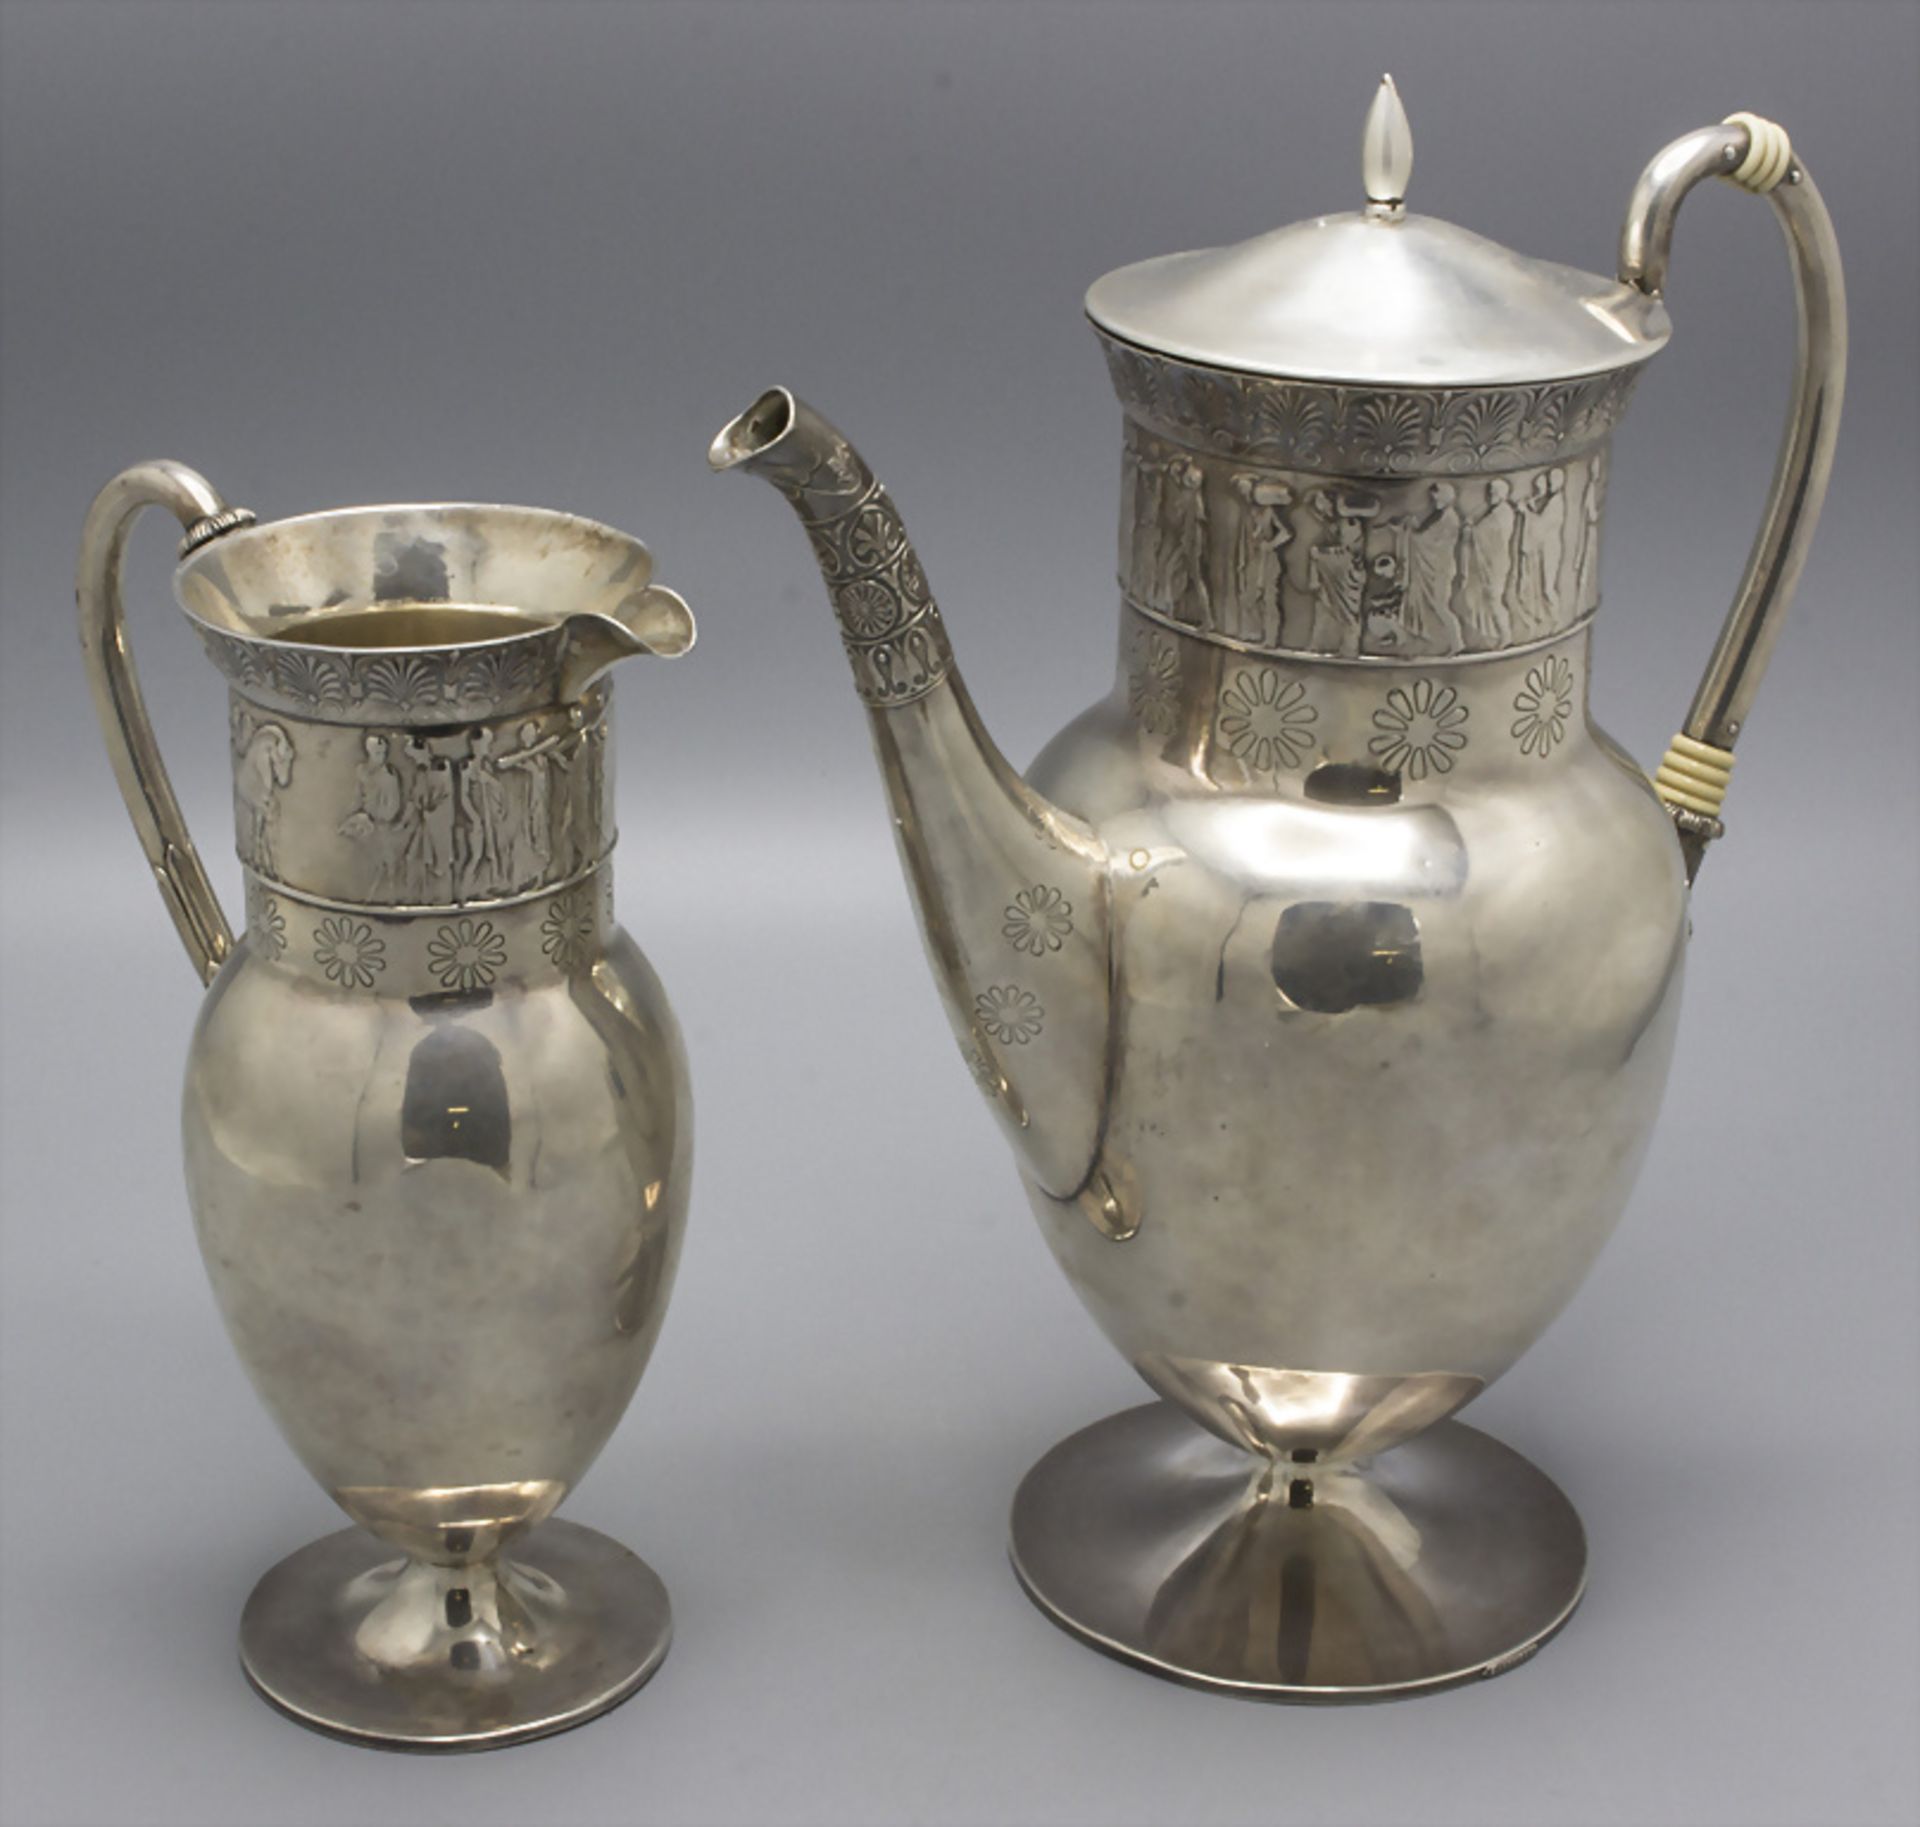 Jugendstil Kaffeekanne und Milchkanne / An Art Nouveau silver coffee pot and milk jug, ...